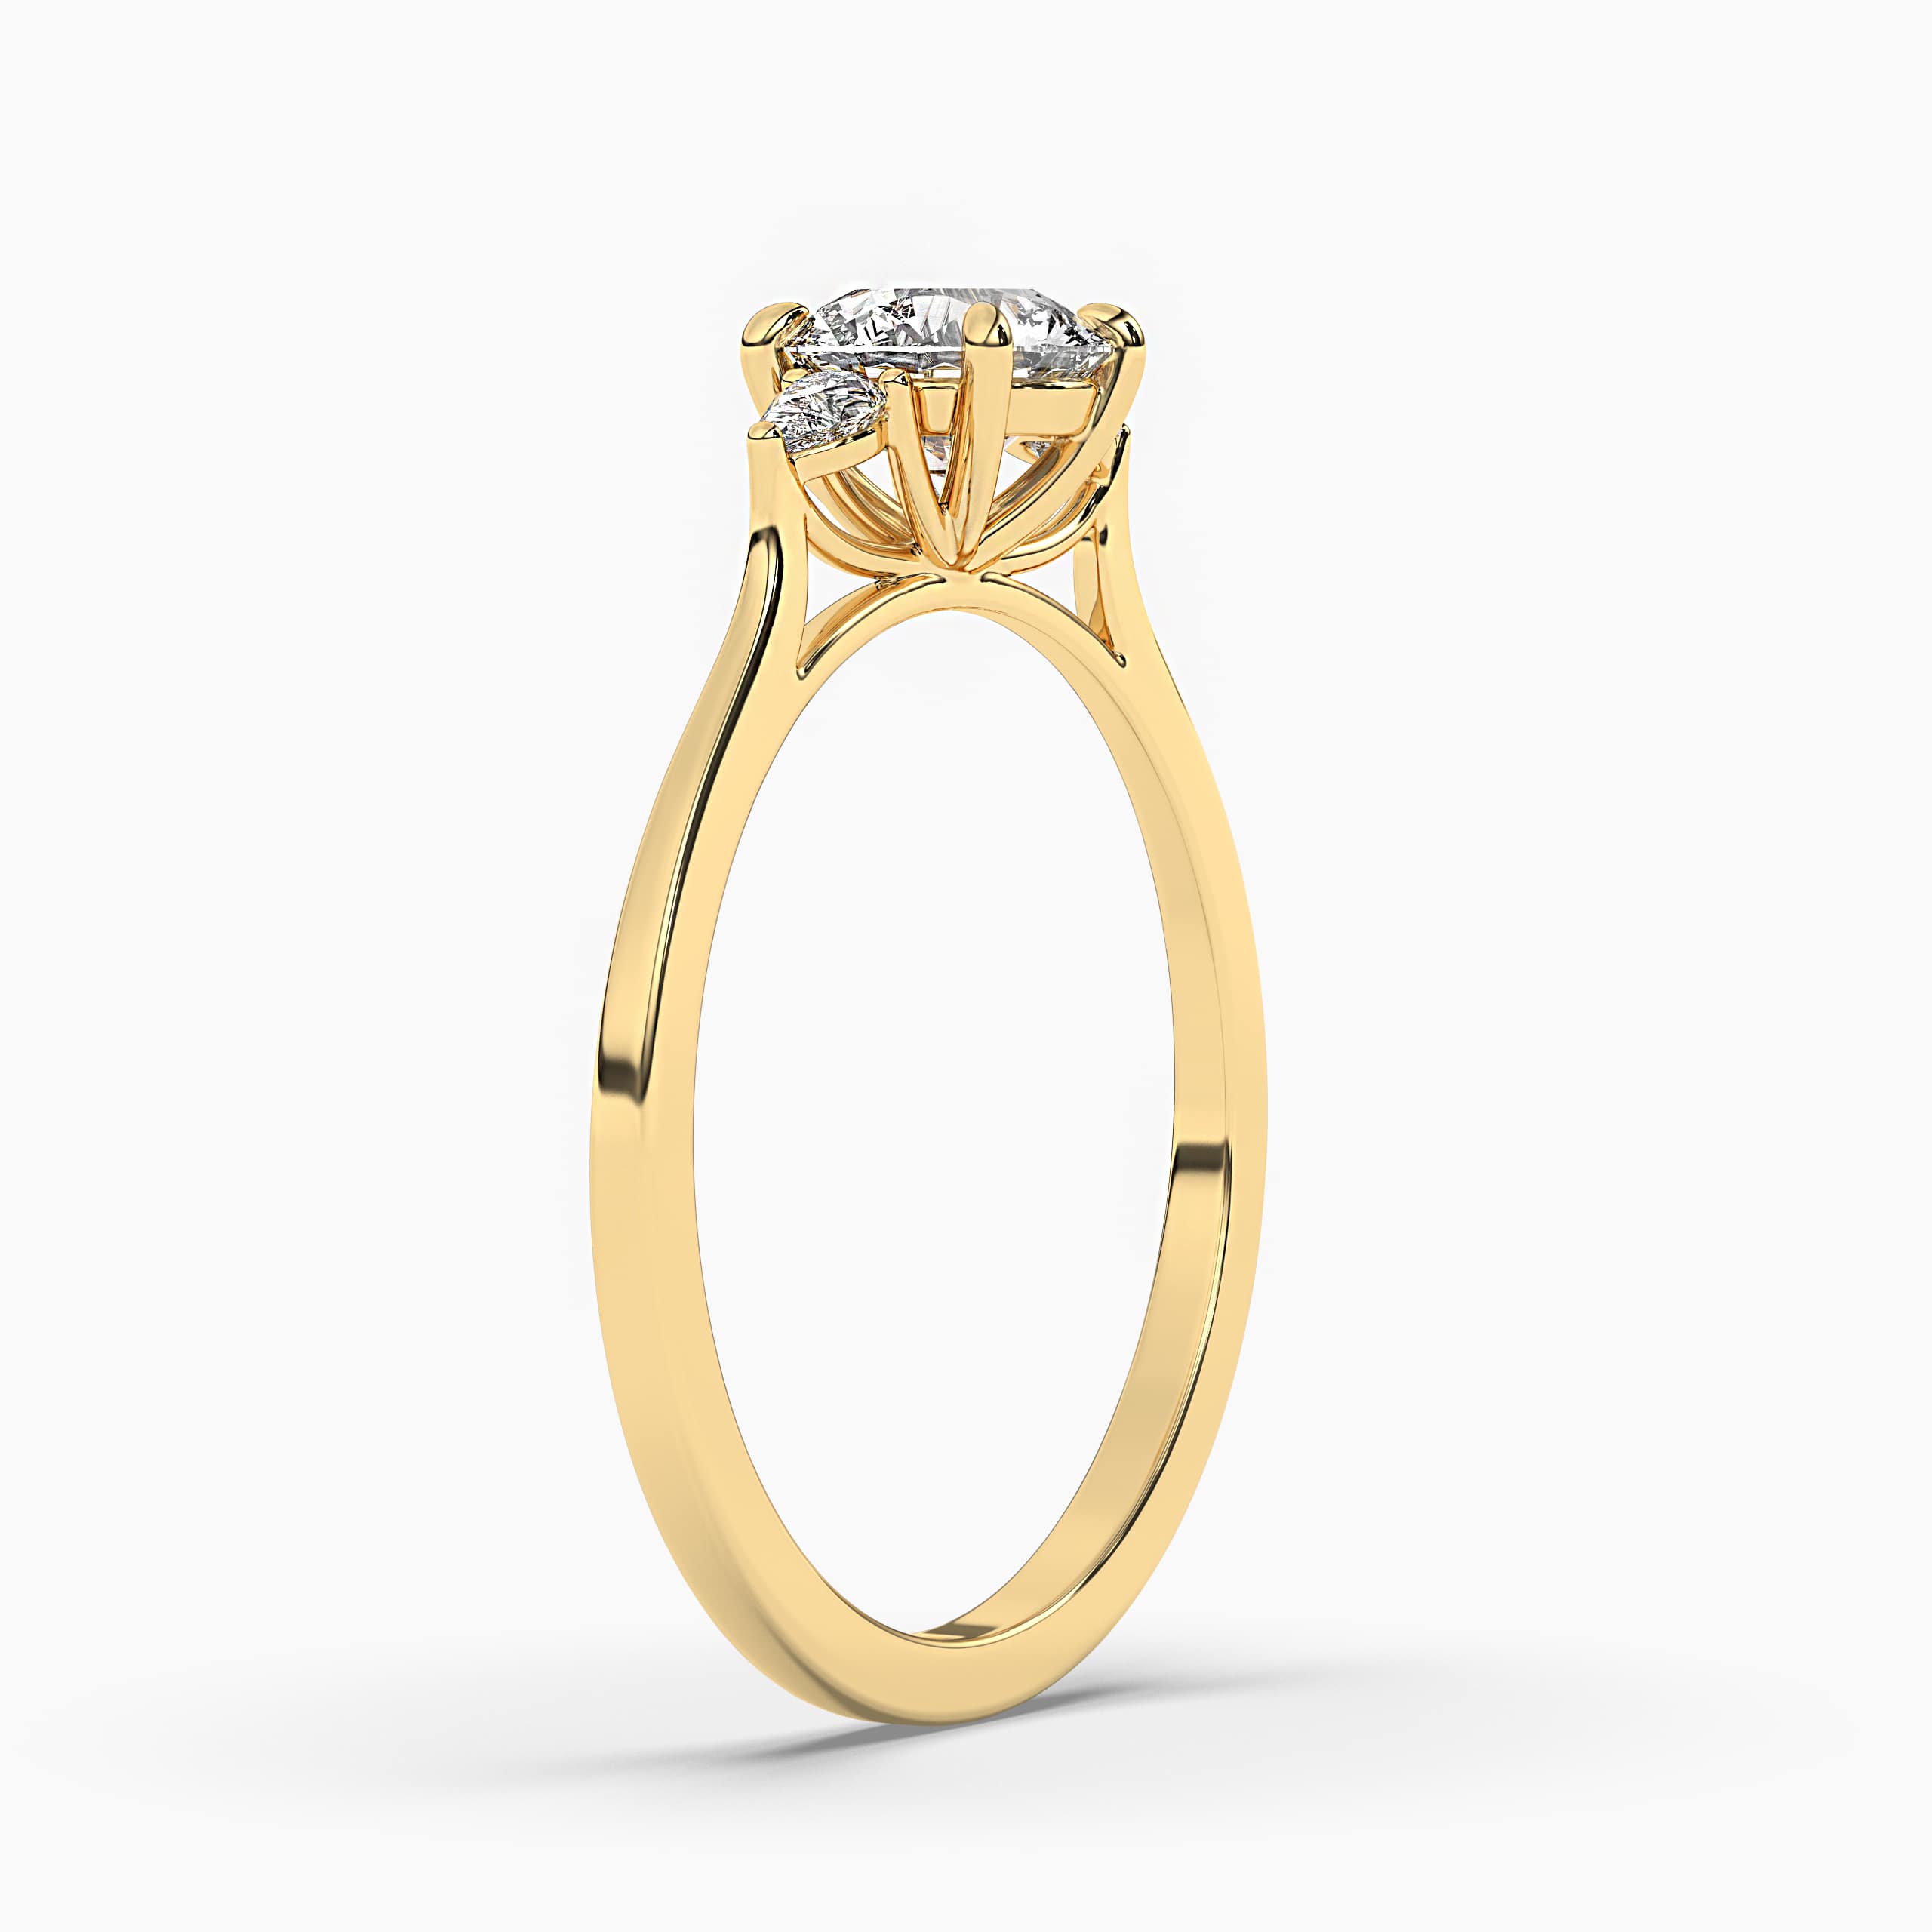 The Three Stone Round Brilliant Engagement Ring